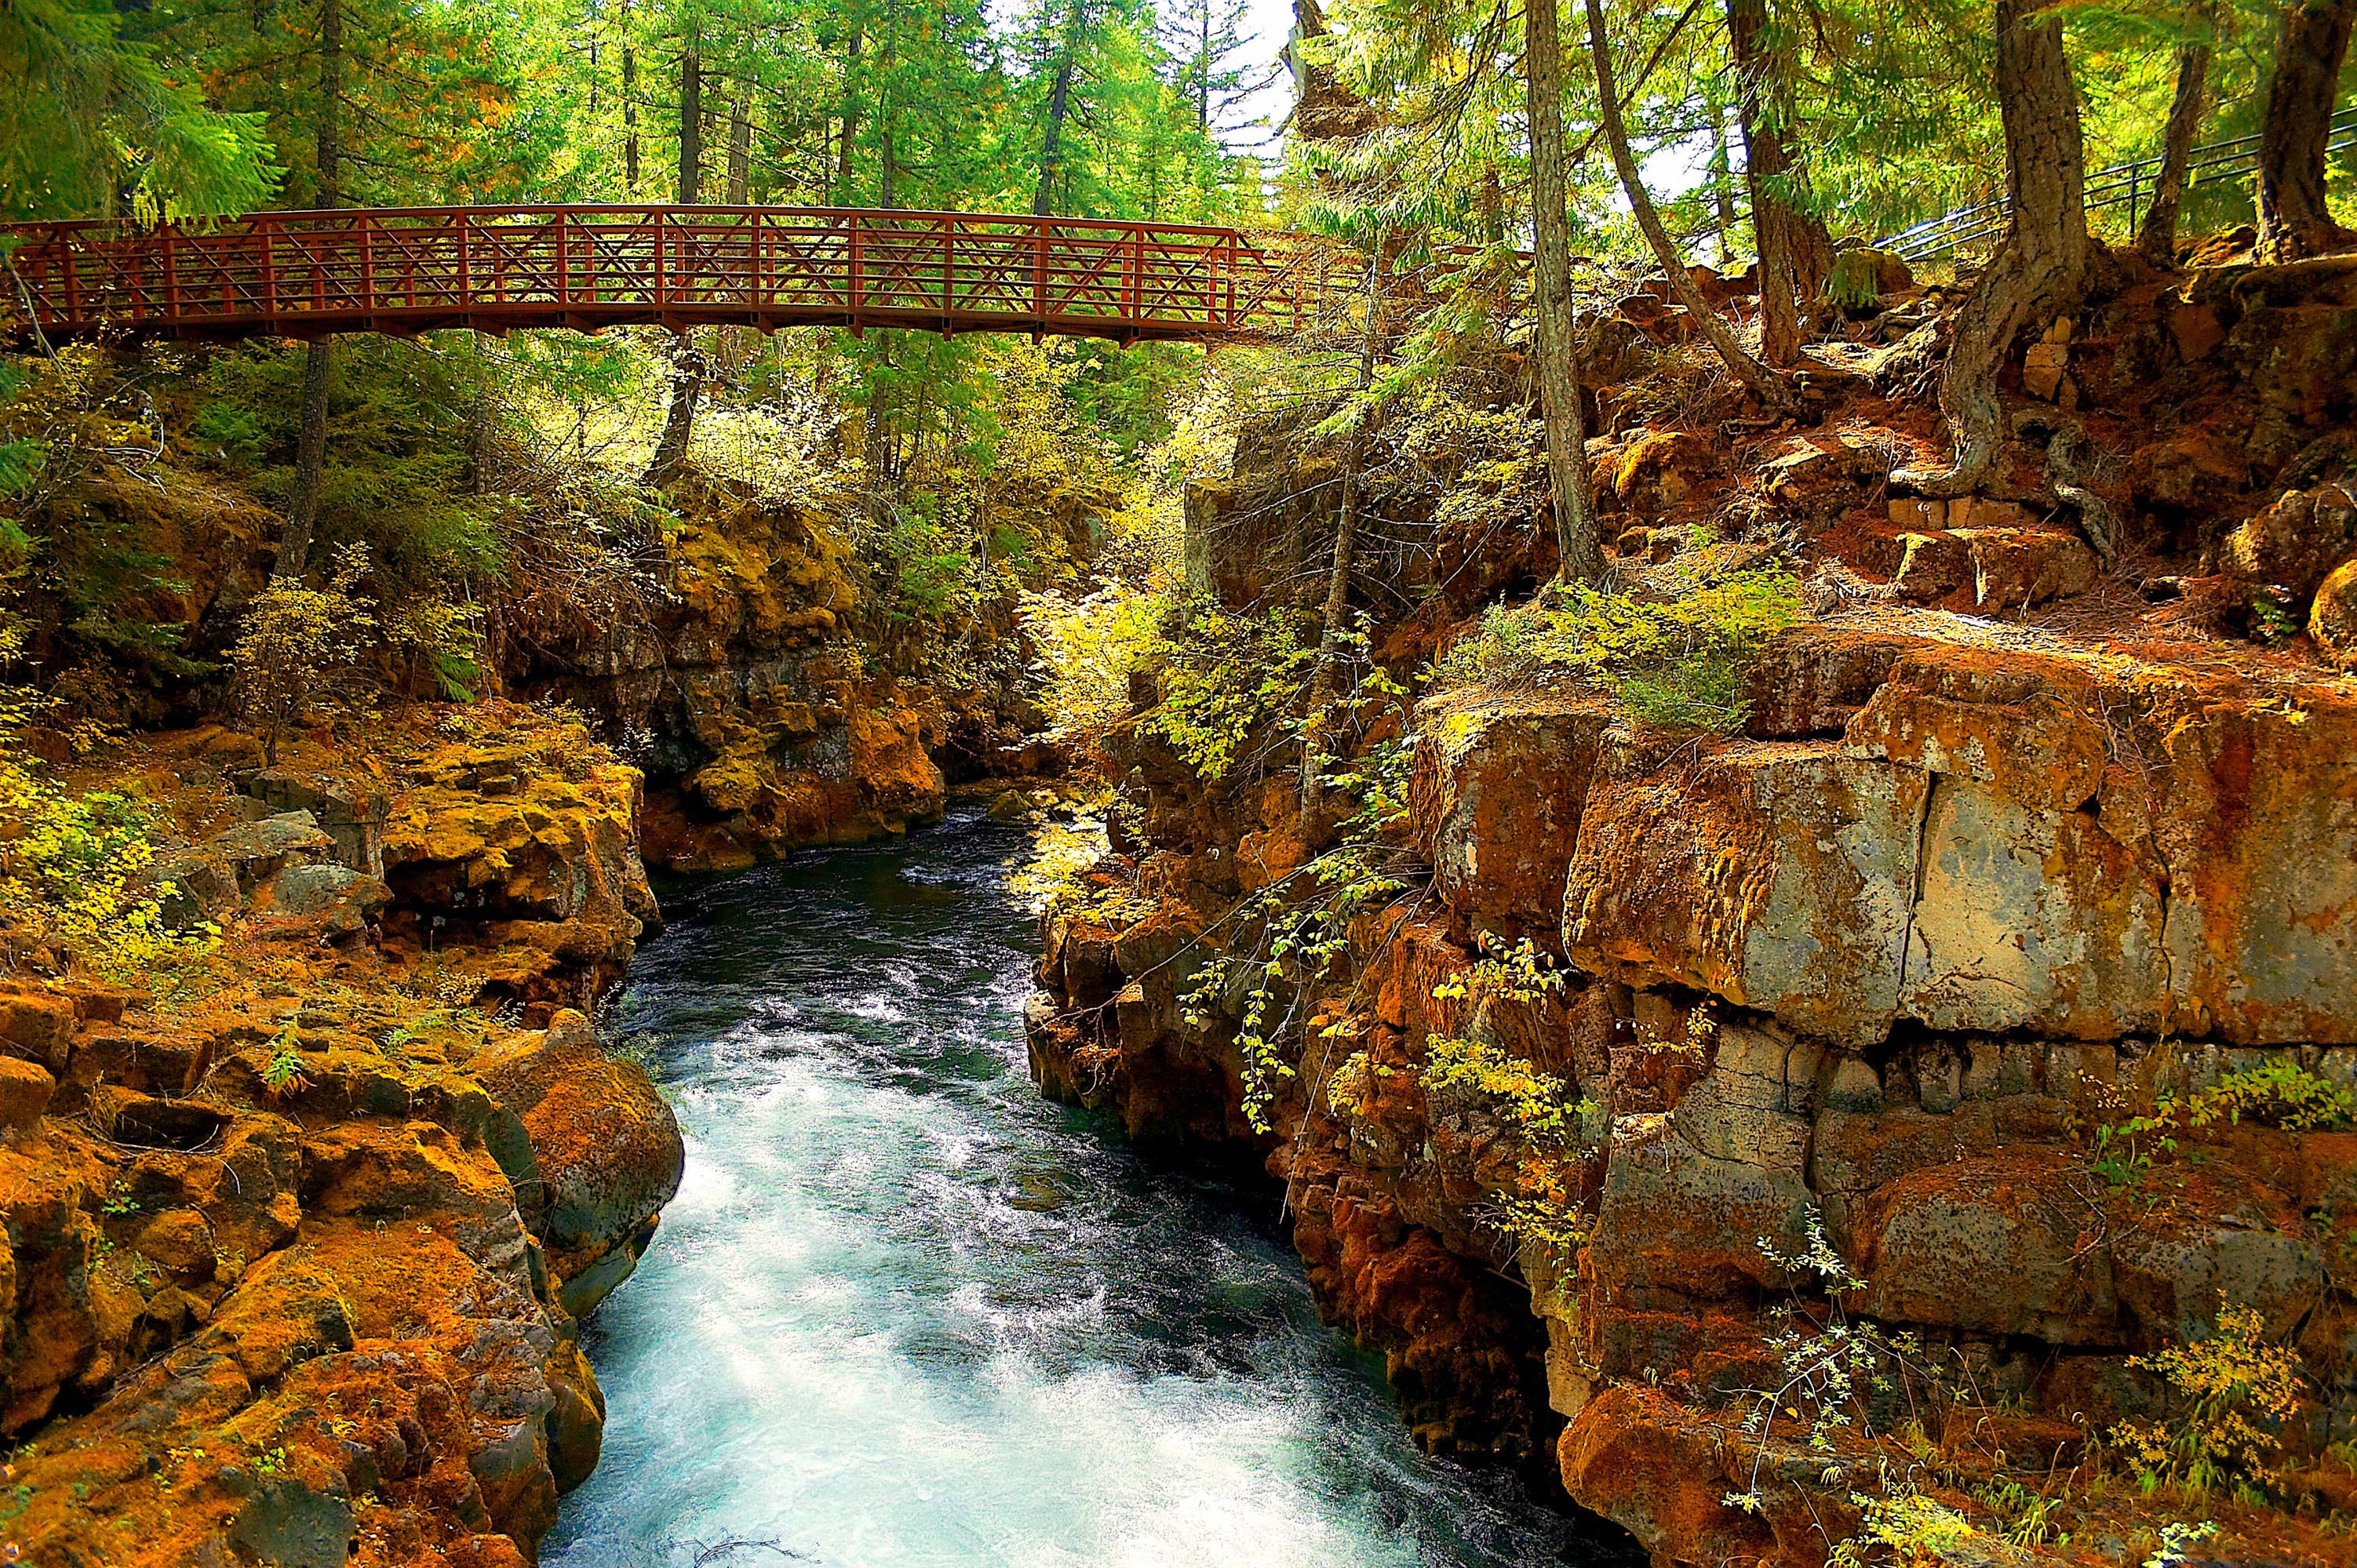 File:Rogue River Oregon USA.jpg - Wikipedia